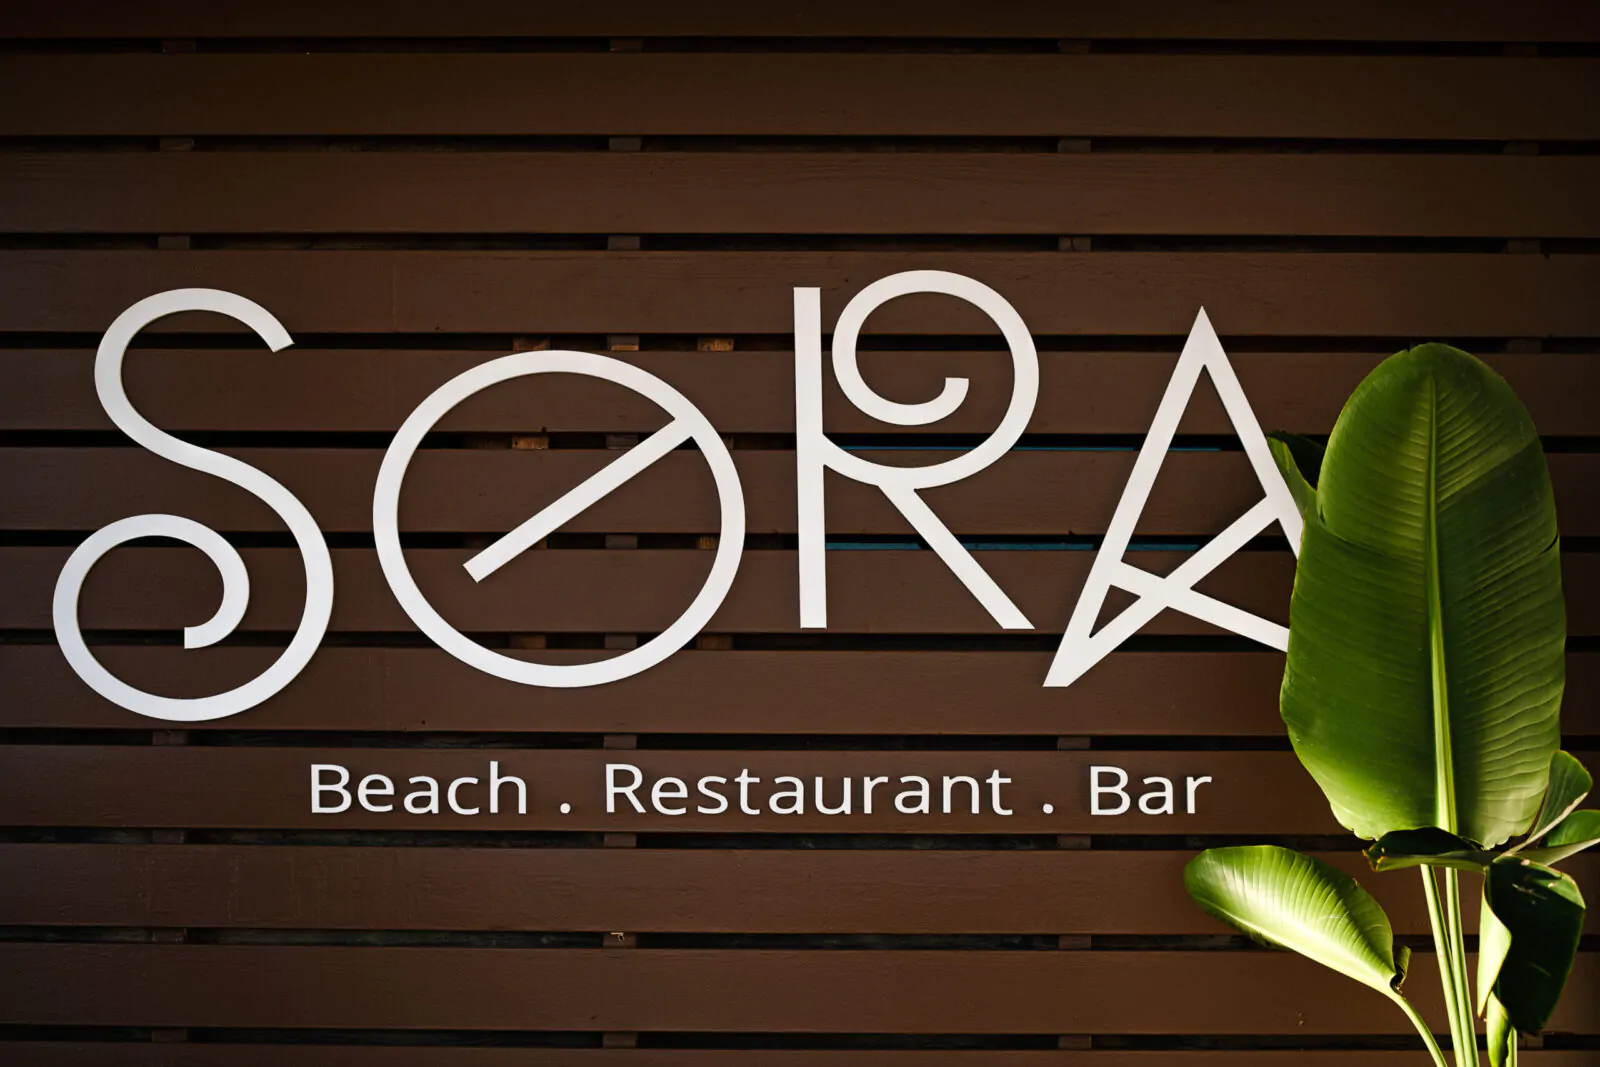 SORA Beach Restaurant Bar Signage